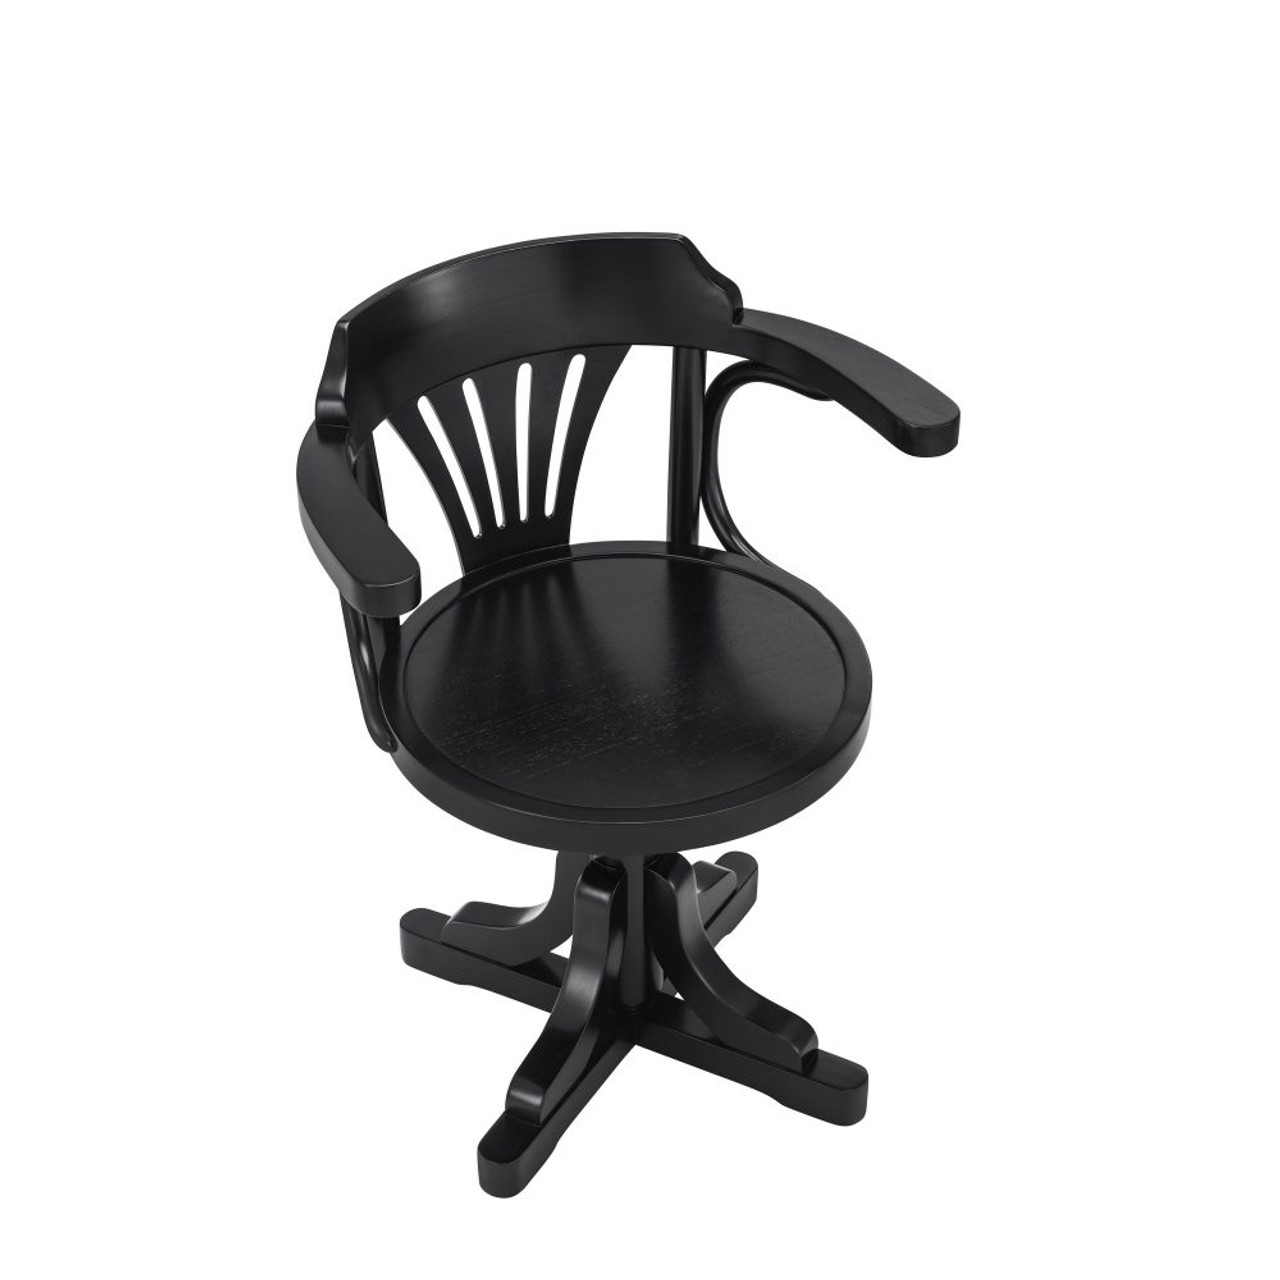 Purser's Desk Chair, Black